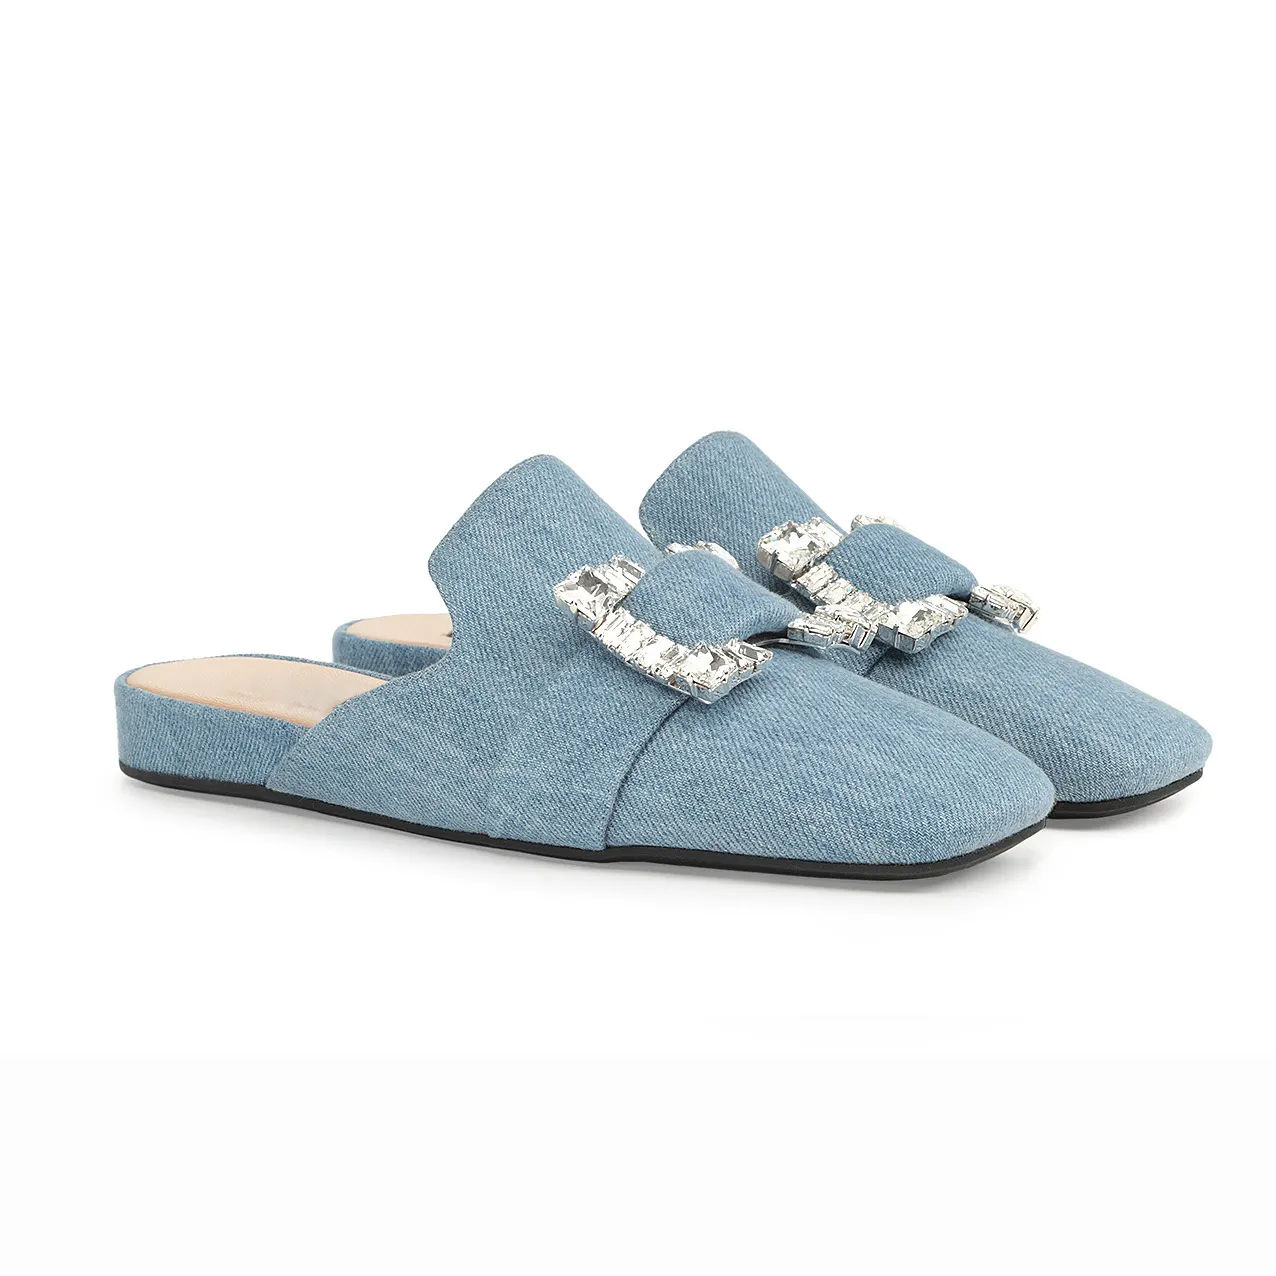 Custom Close Square Toe Denim Upper With Crystal Buckle Decoration Flats Mules Ladies Women's Slide Diamond Slipper Sandals